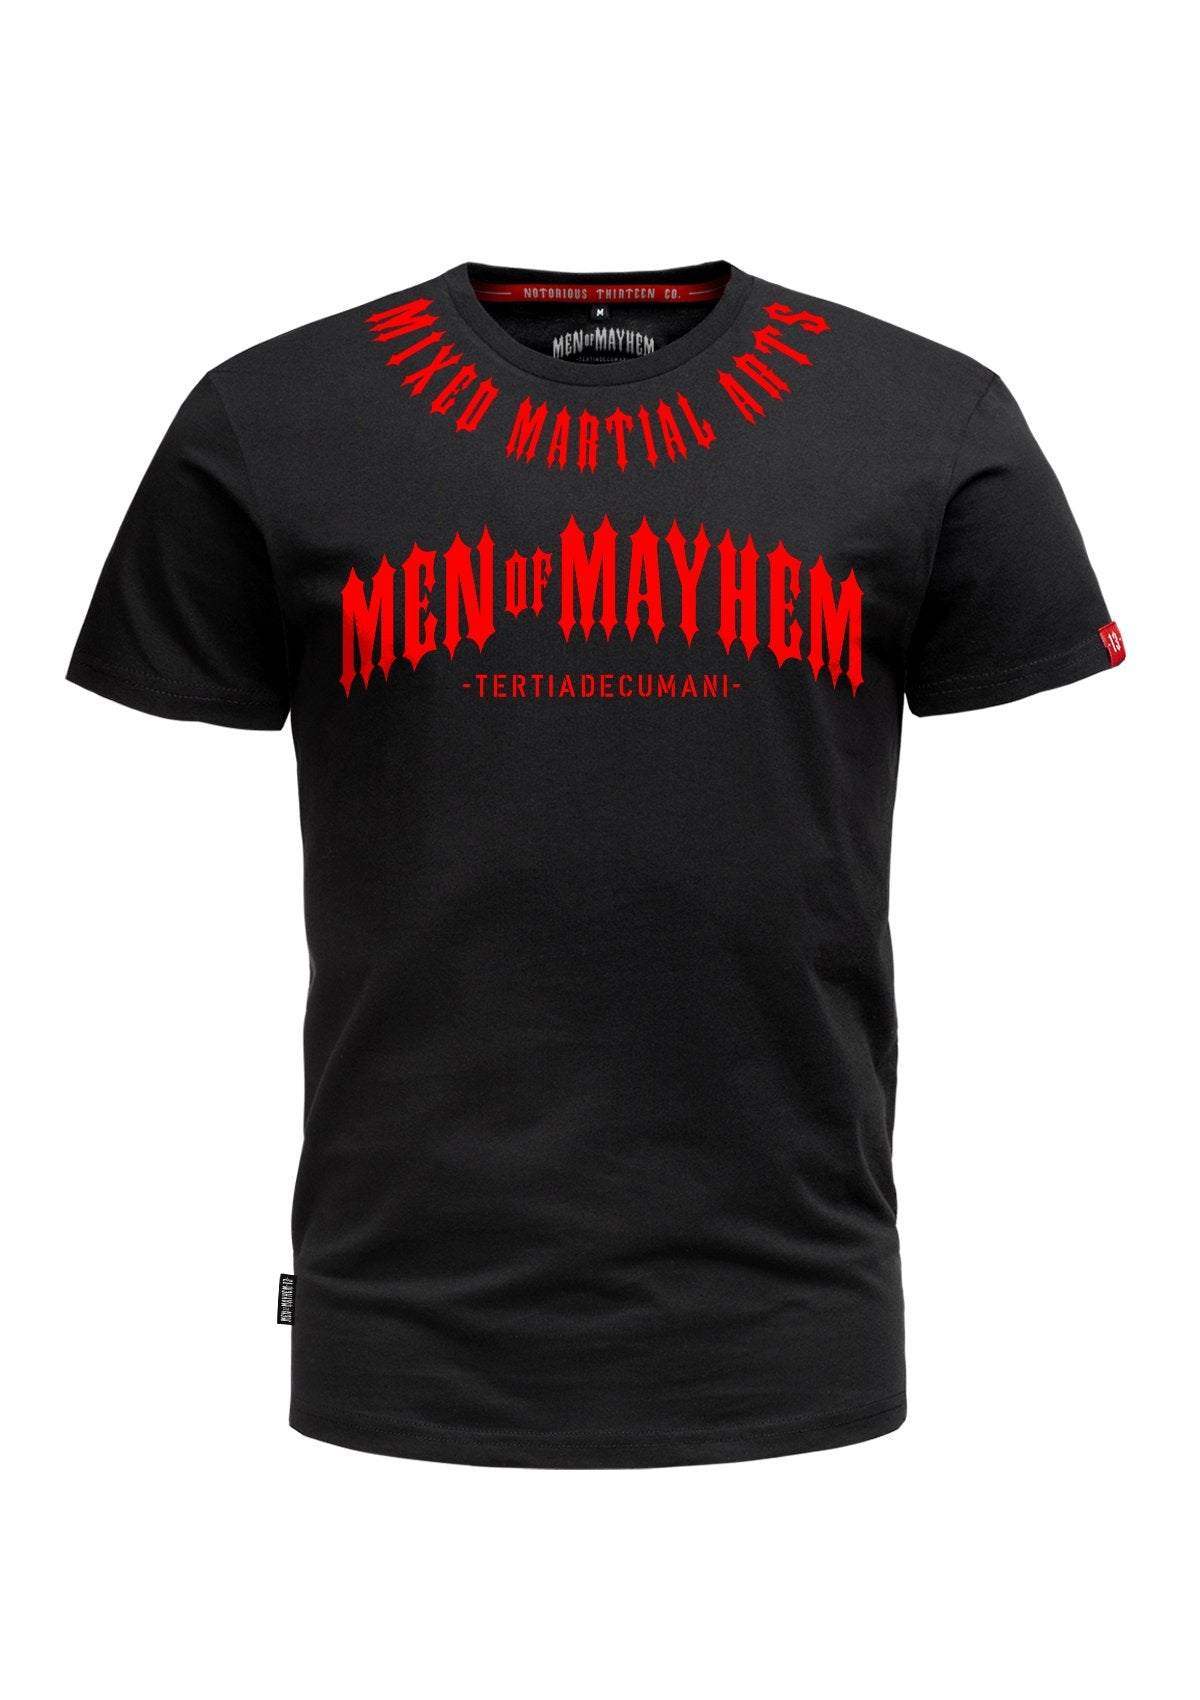 T-Shirt Mayhem Fight Team S/R - MEN OF MAYHEM - ALAIKO-EXCHANGES-MM-M-1010-FT-SR - black - Fight Team